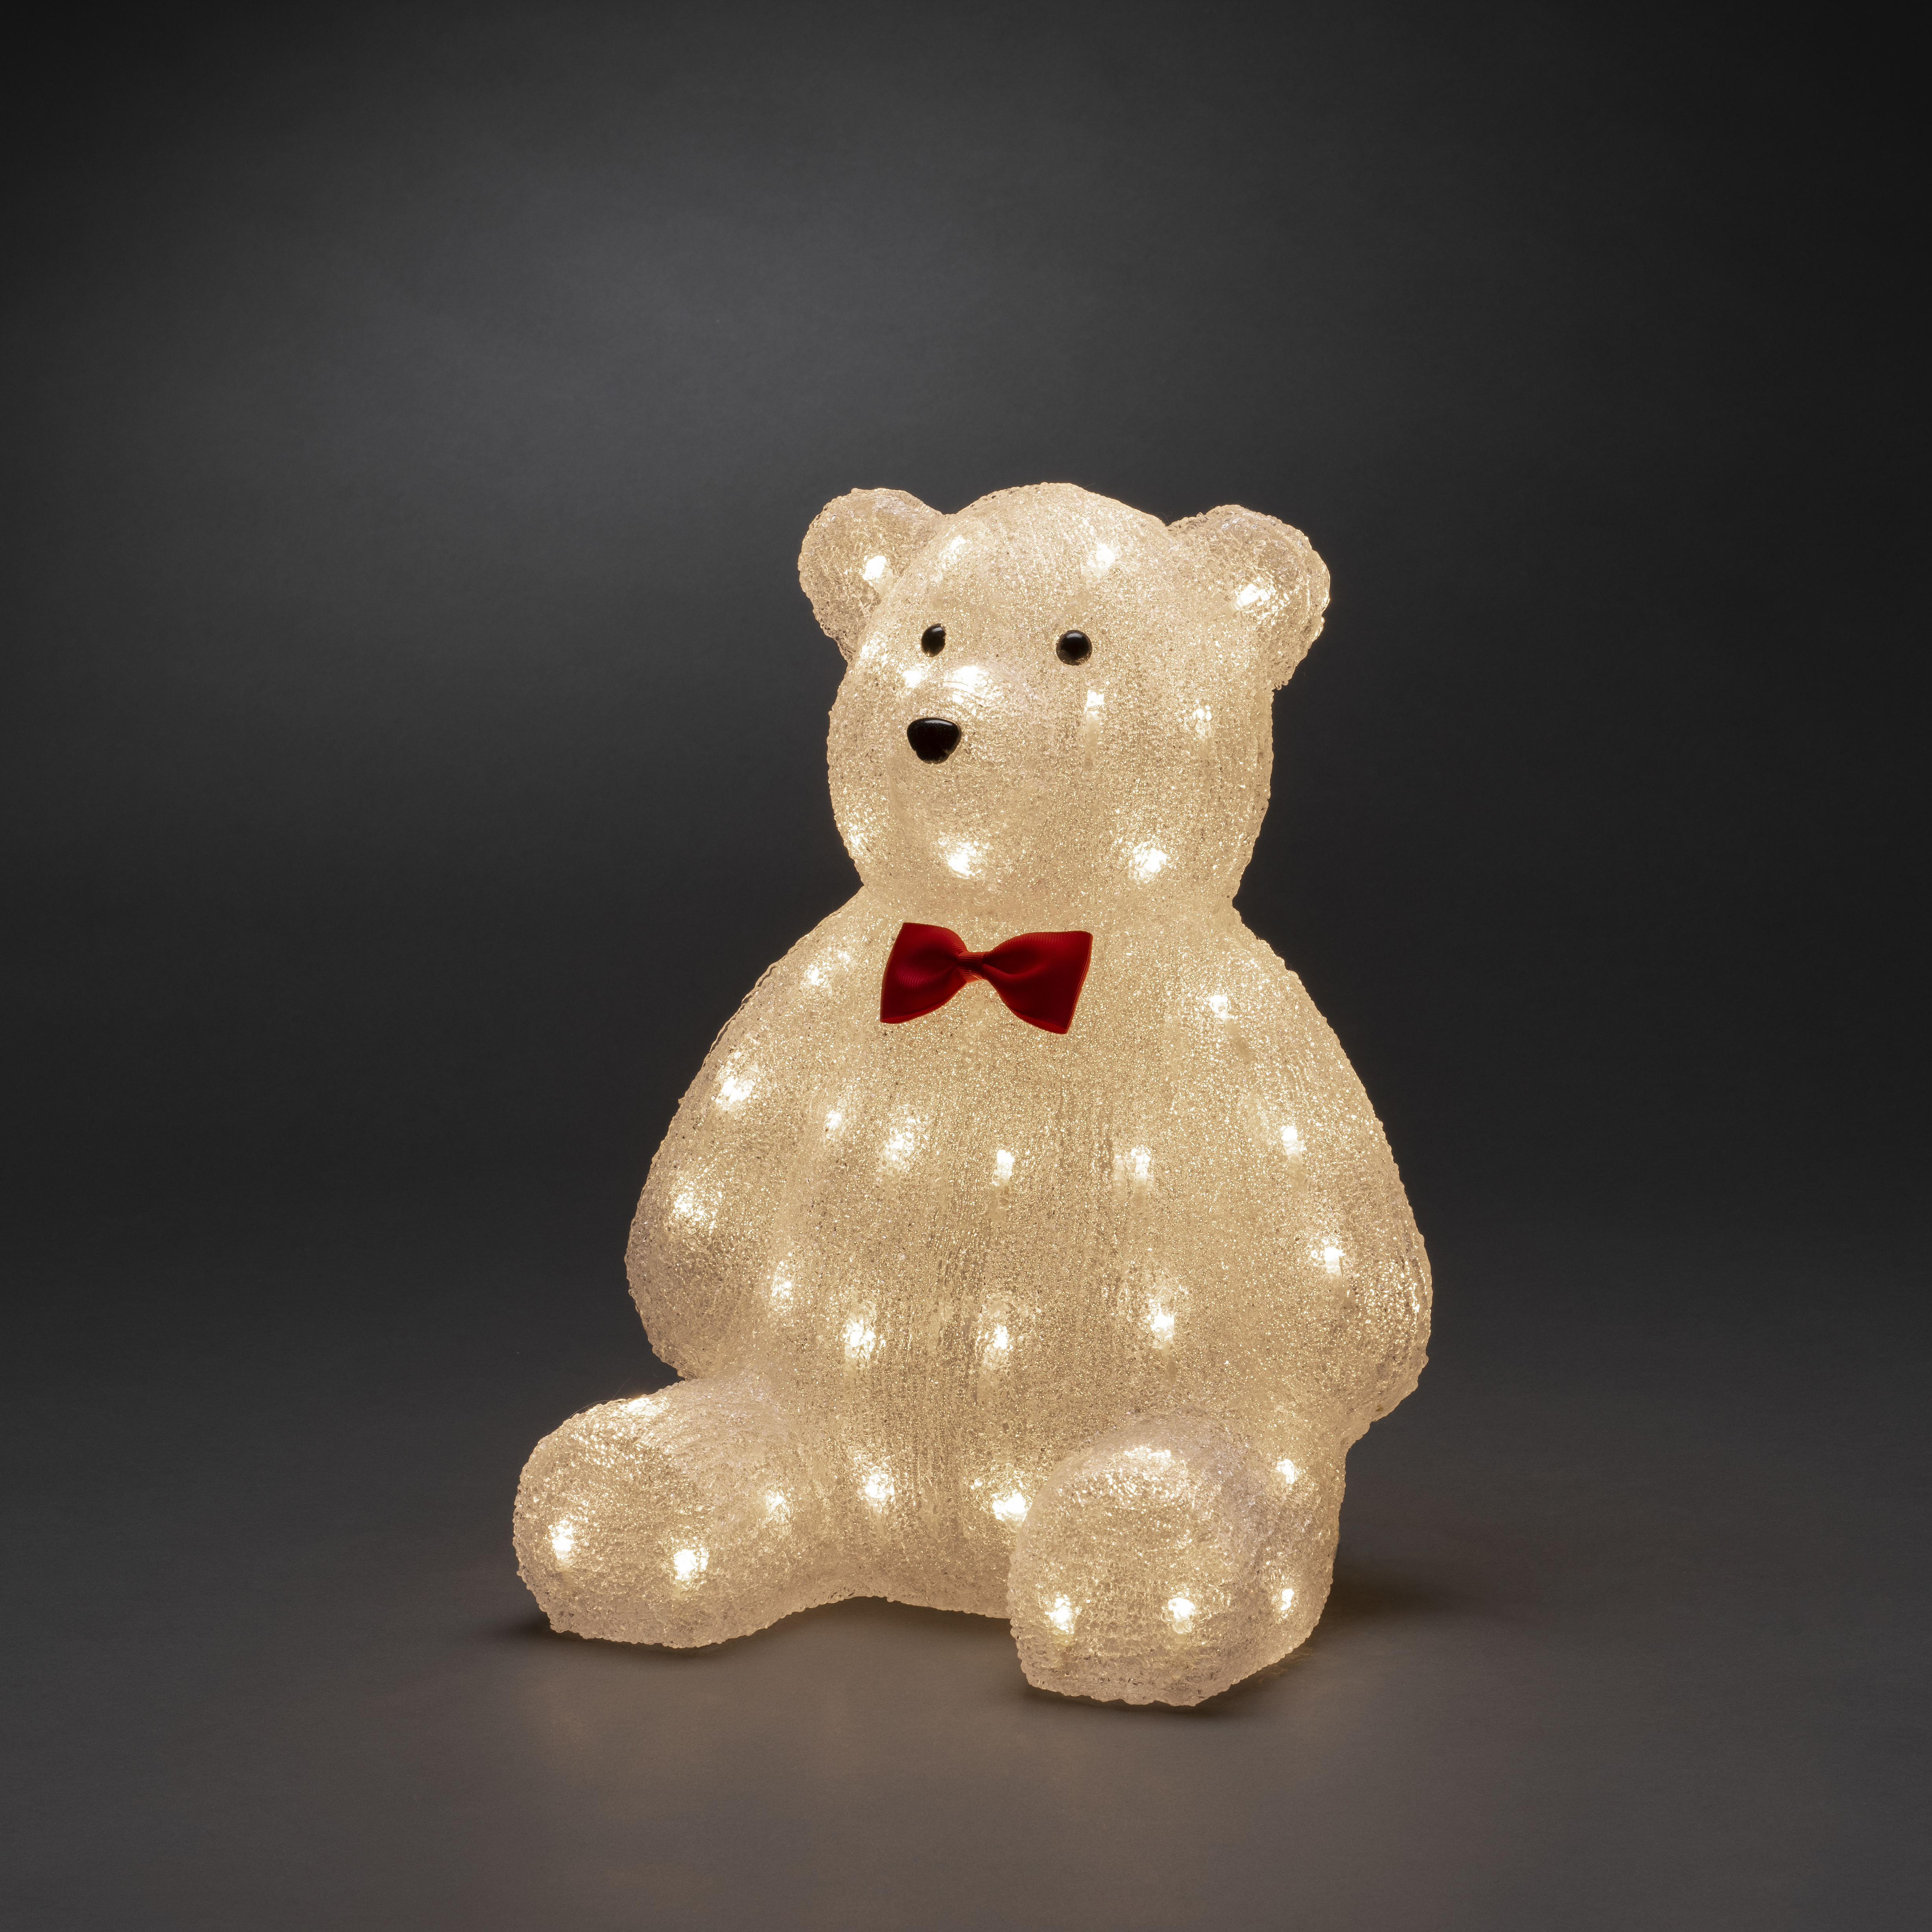 Konstsmide LED Acryl Teddybär, 64 warm weiße